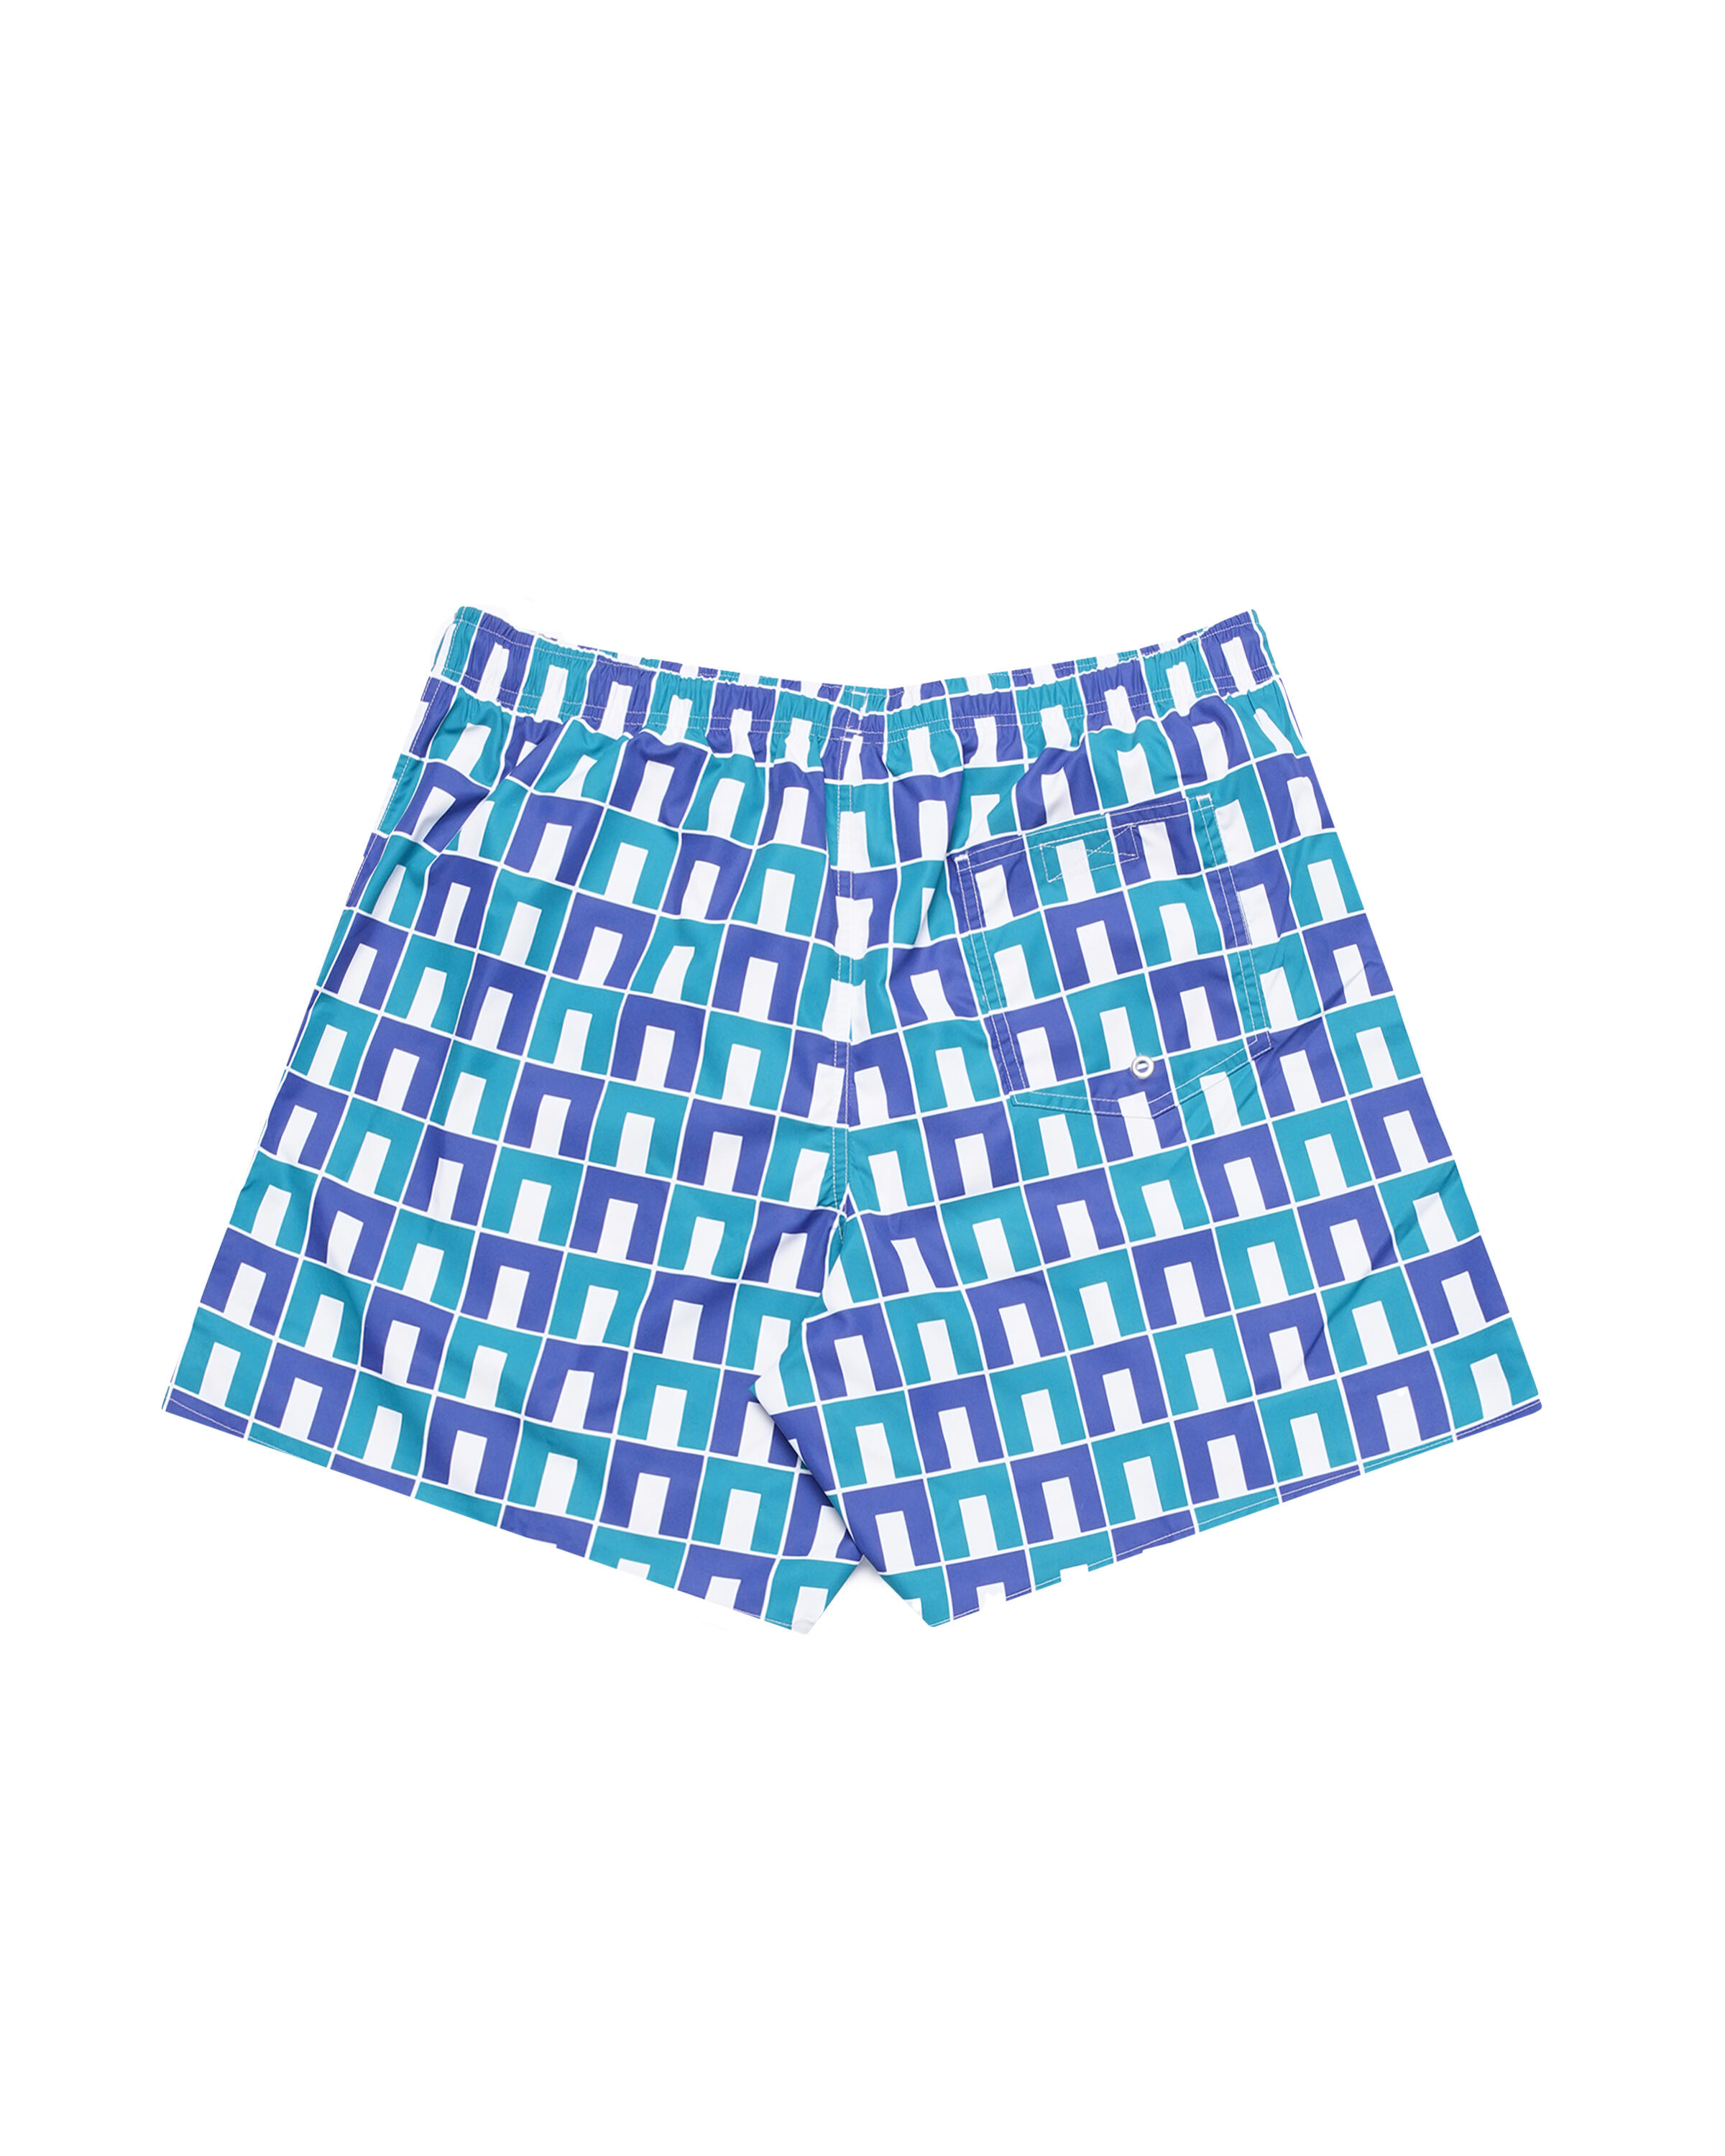 Lacoste Swim Shorts